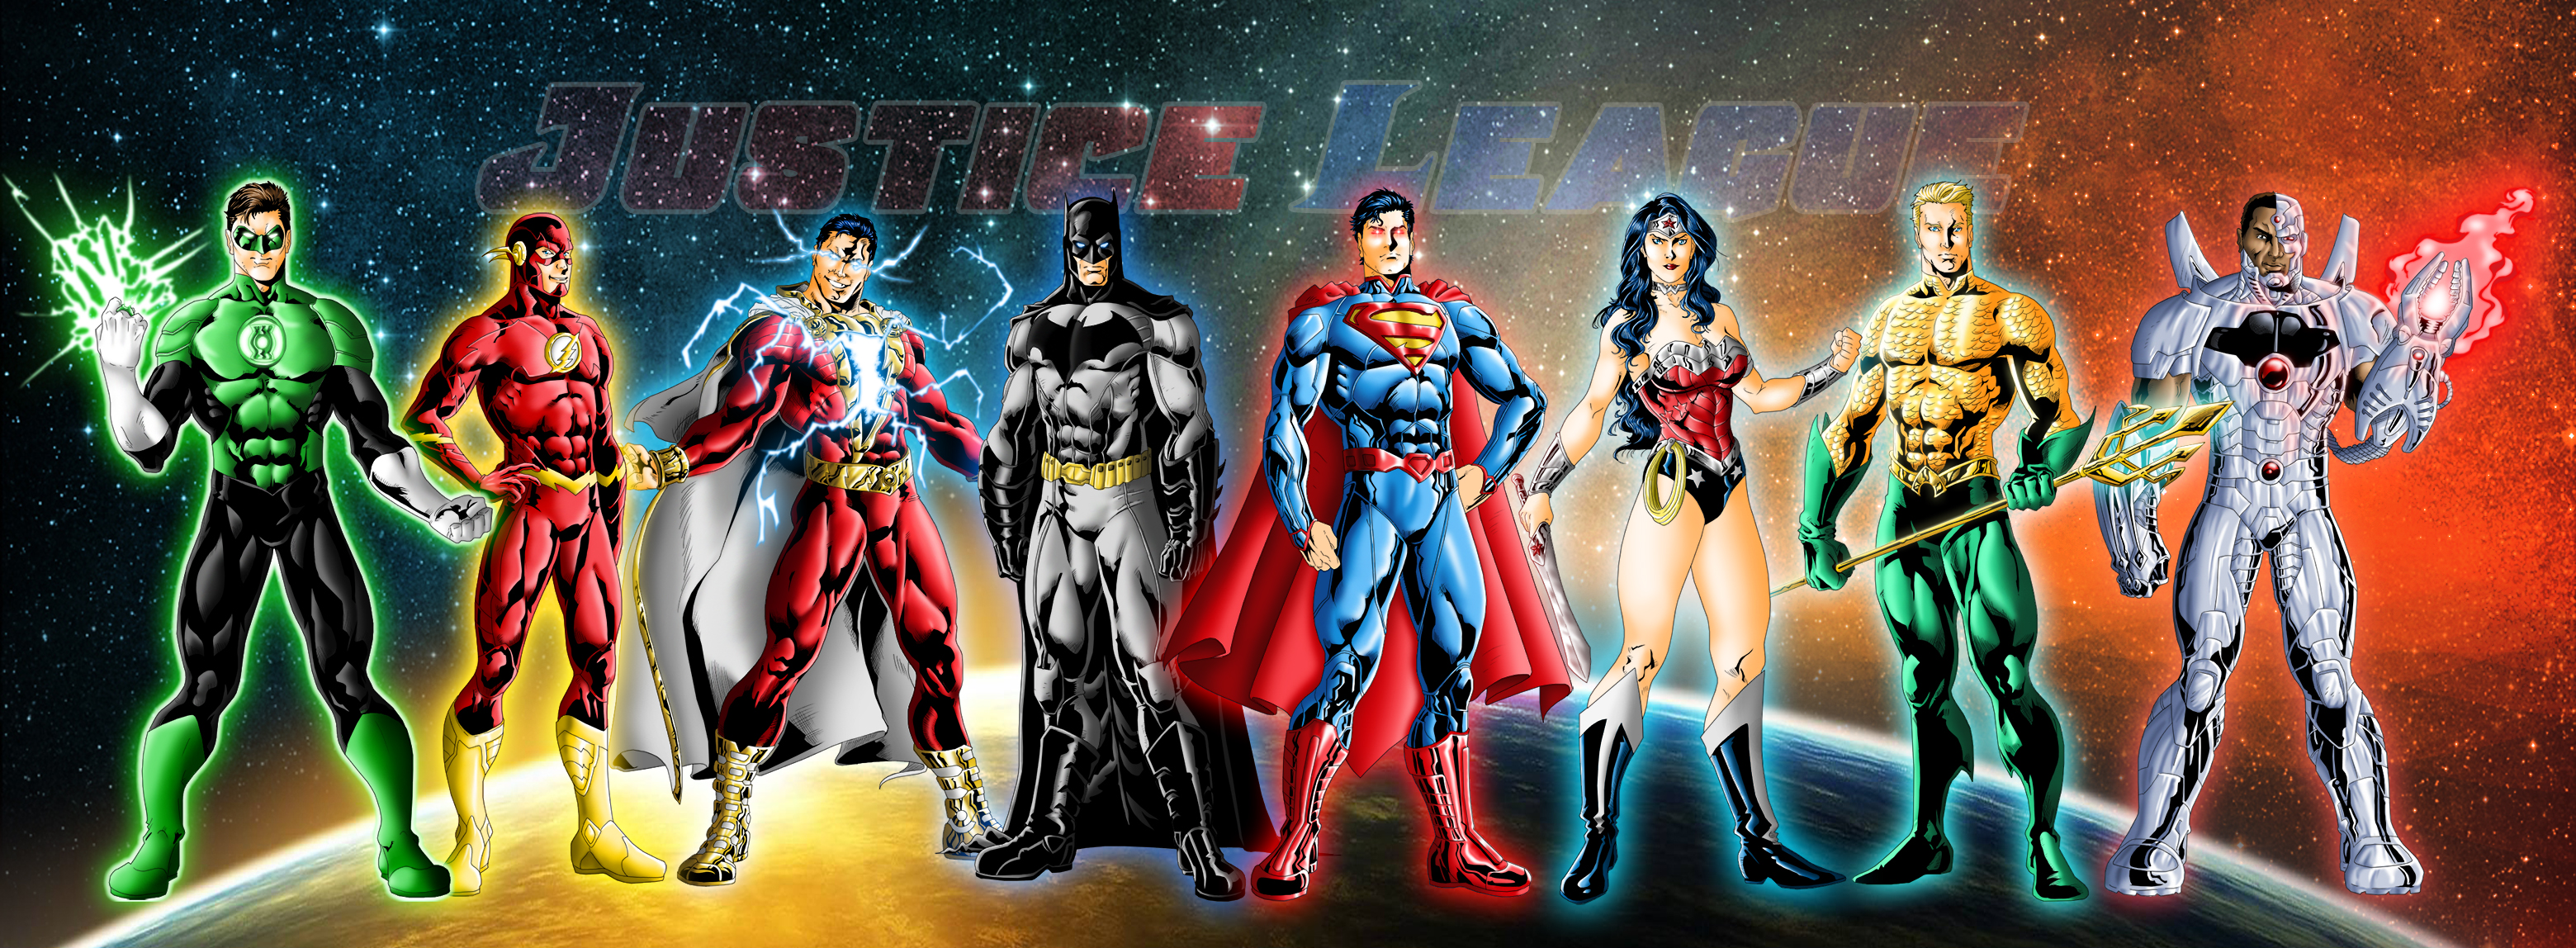 Justice League New 52 Wallpaper Justice league